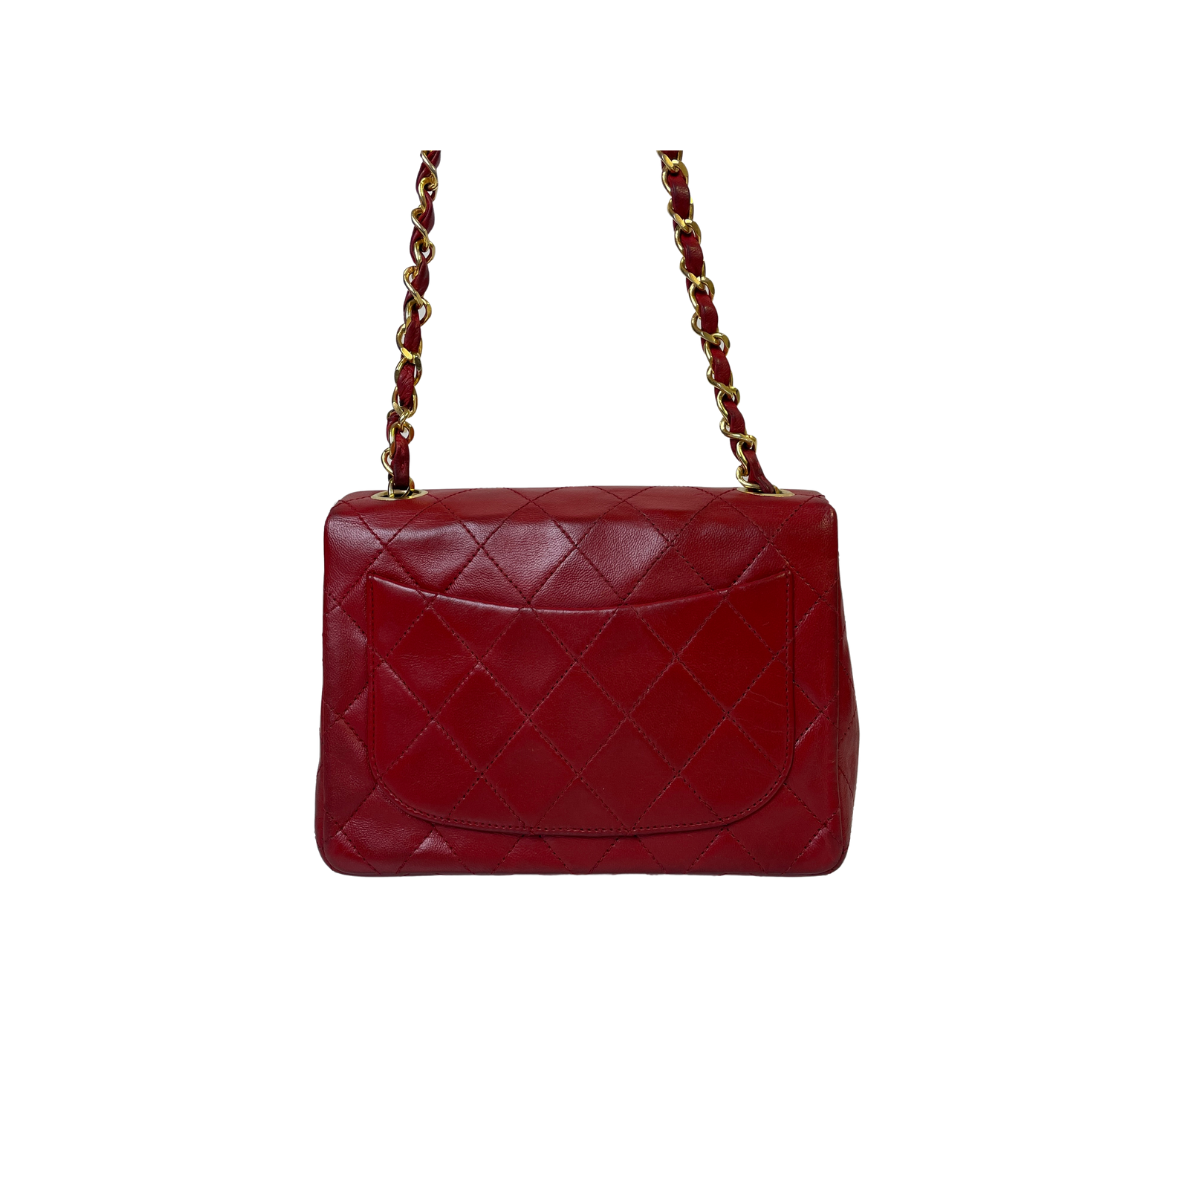 Chanel Vintage Chanel 8 Flap Red Quilted Leather Shoulder Mini Bag